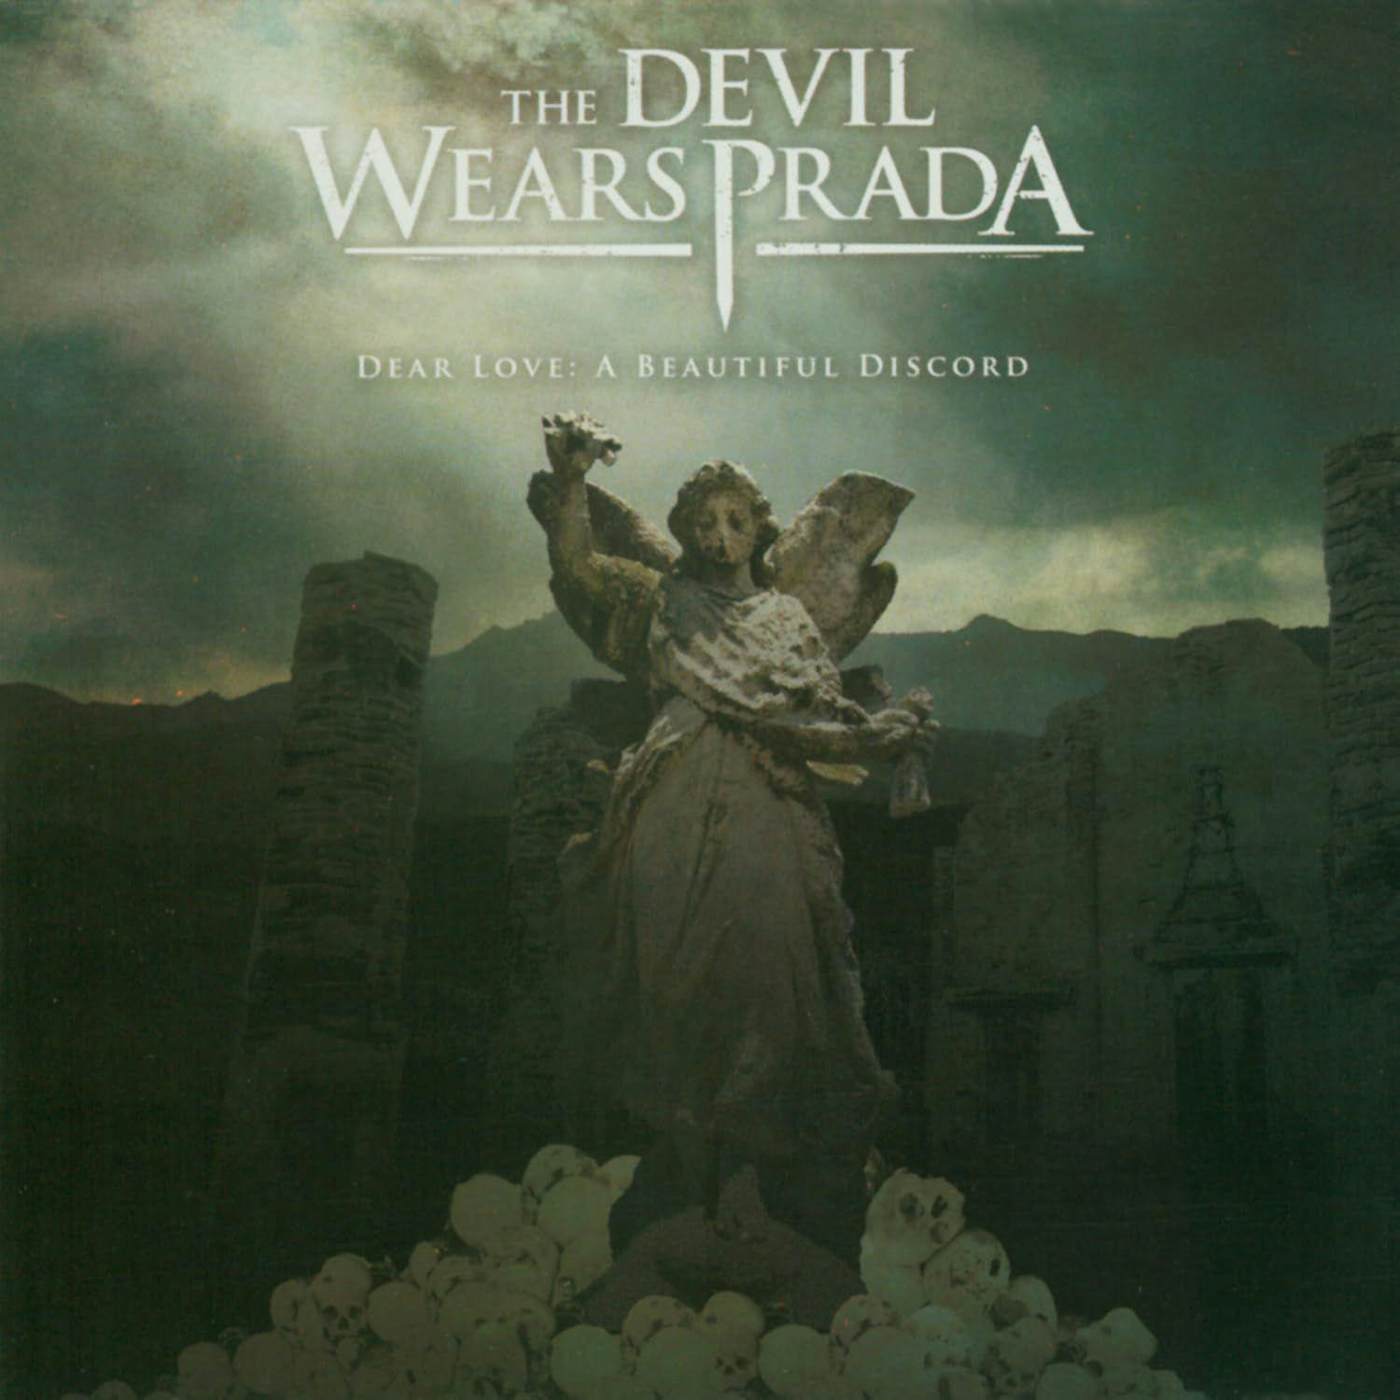 The Devil Wears Prada Dear Love: A Beautiful Discord Vinyl Record